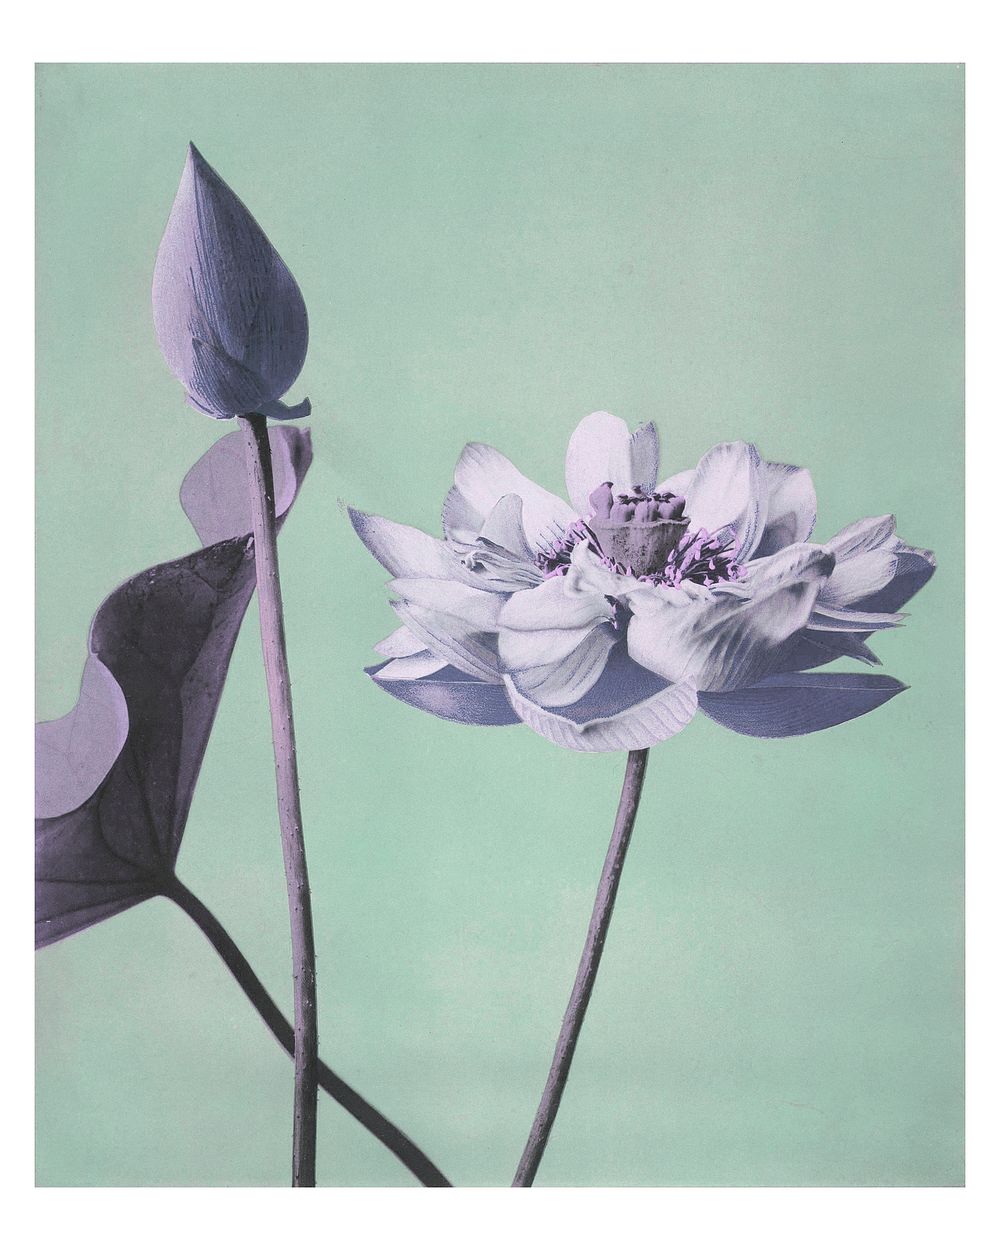 Purple lotus flowers artwork vintage wall art print and poster design remix from original photography by Ogawa Kazumasa.